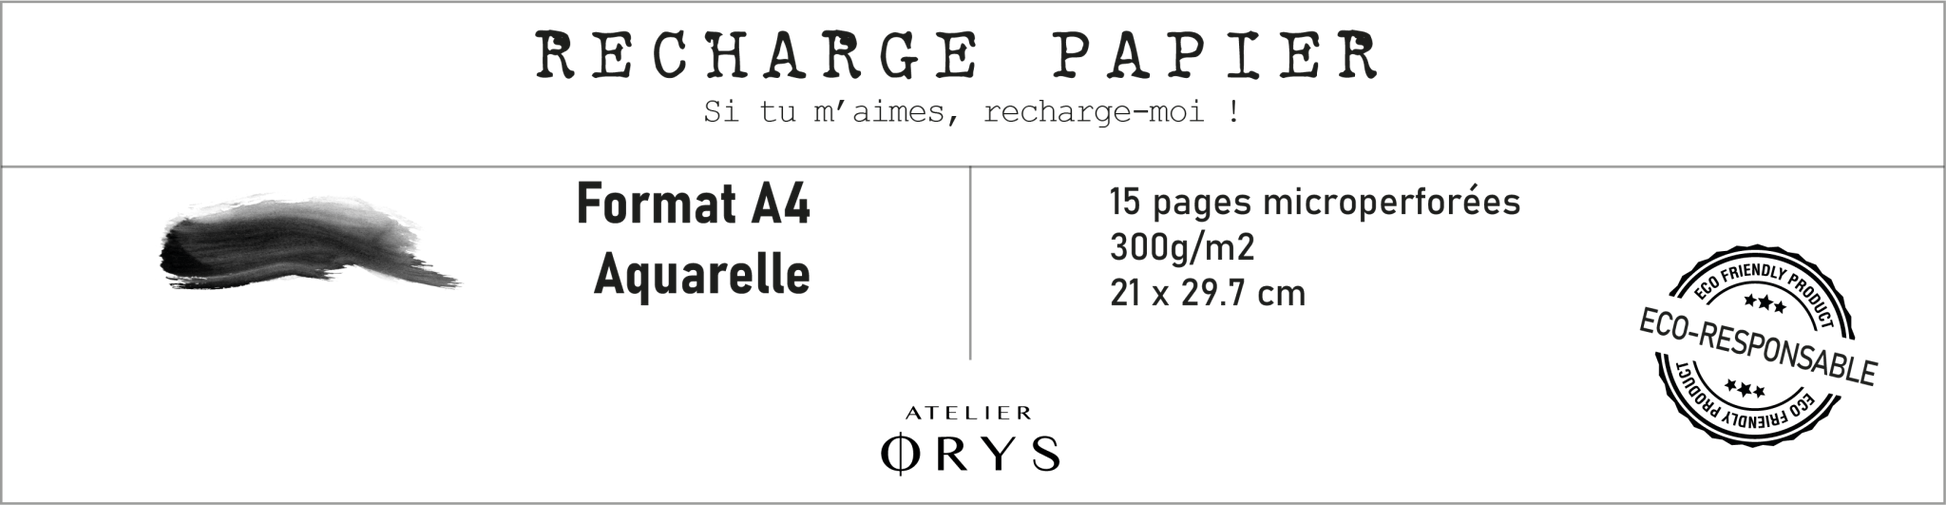 Recharge grand carnet - Aquarelle - Atelier ORYS